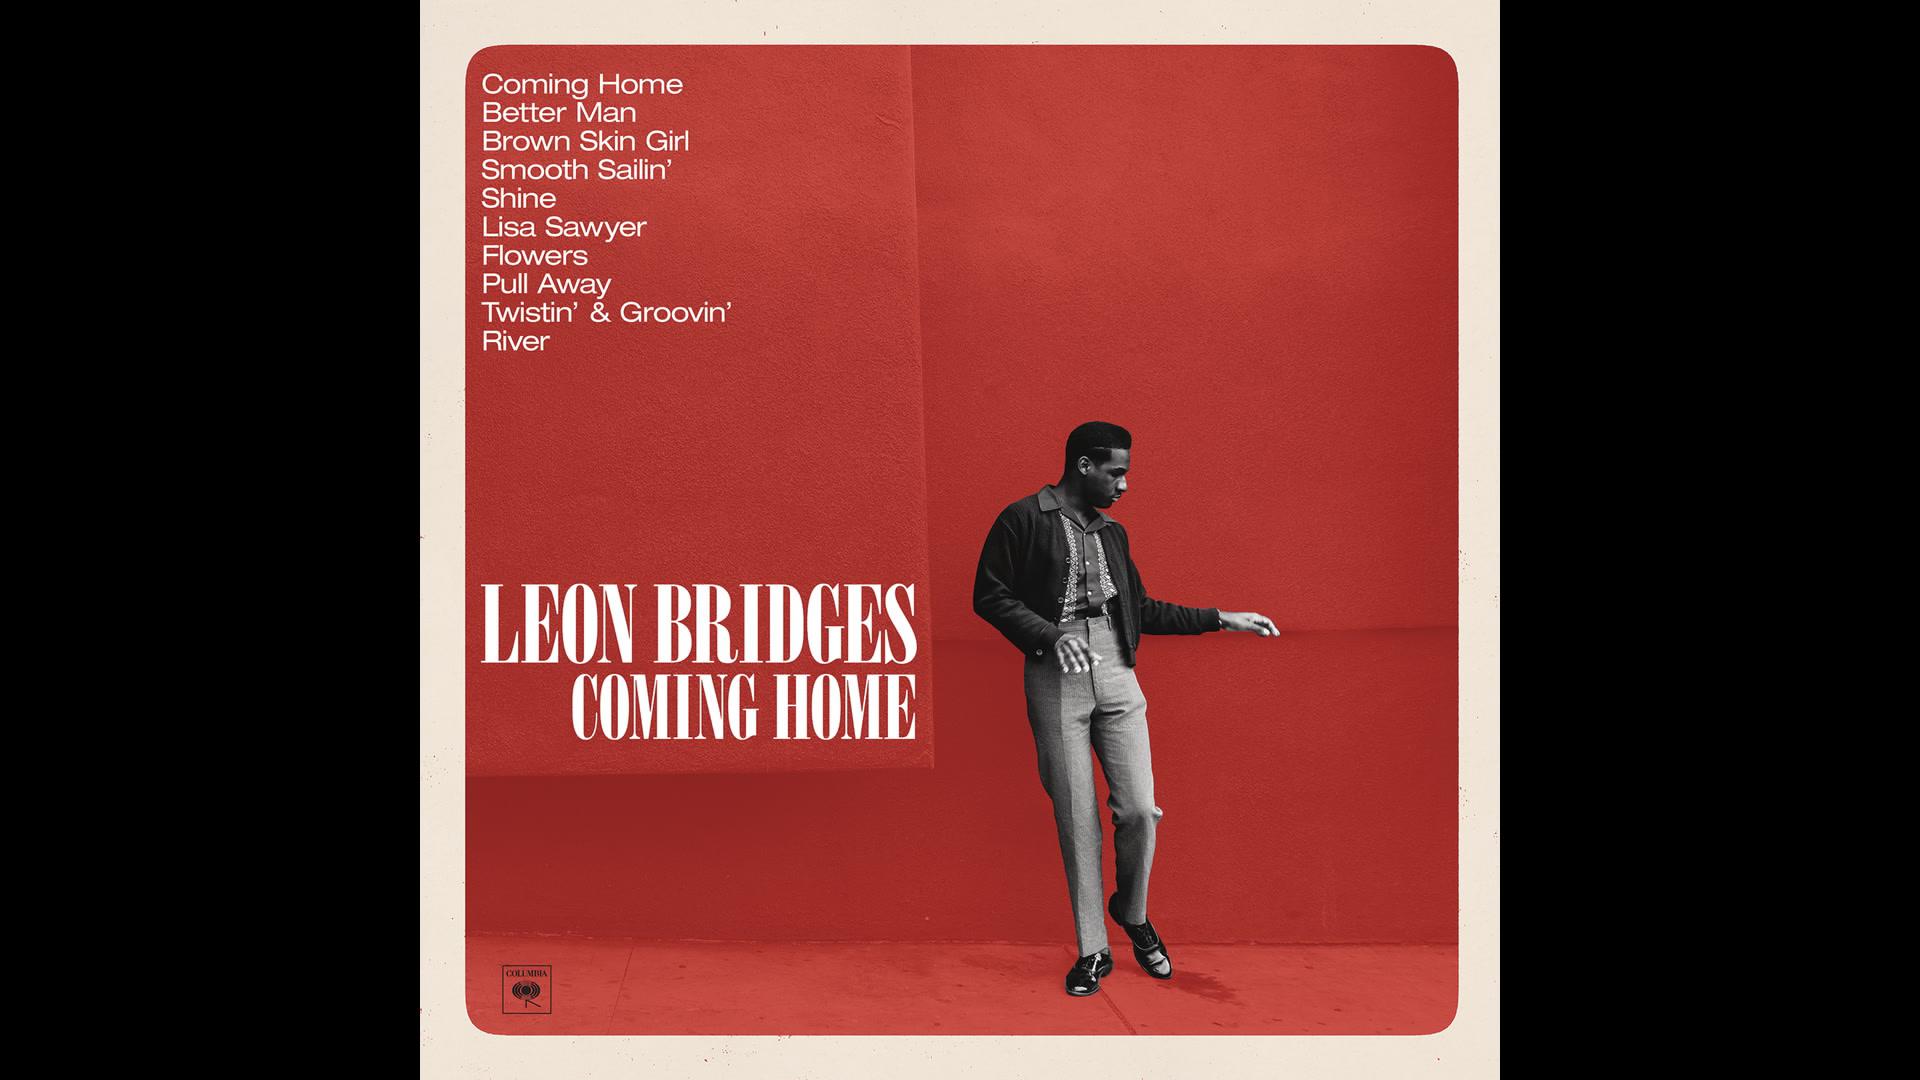 Leon Bridges - Twistin' & Groovin' (Official Audio)